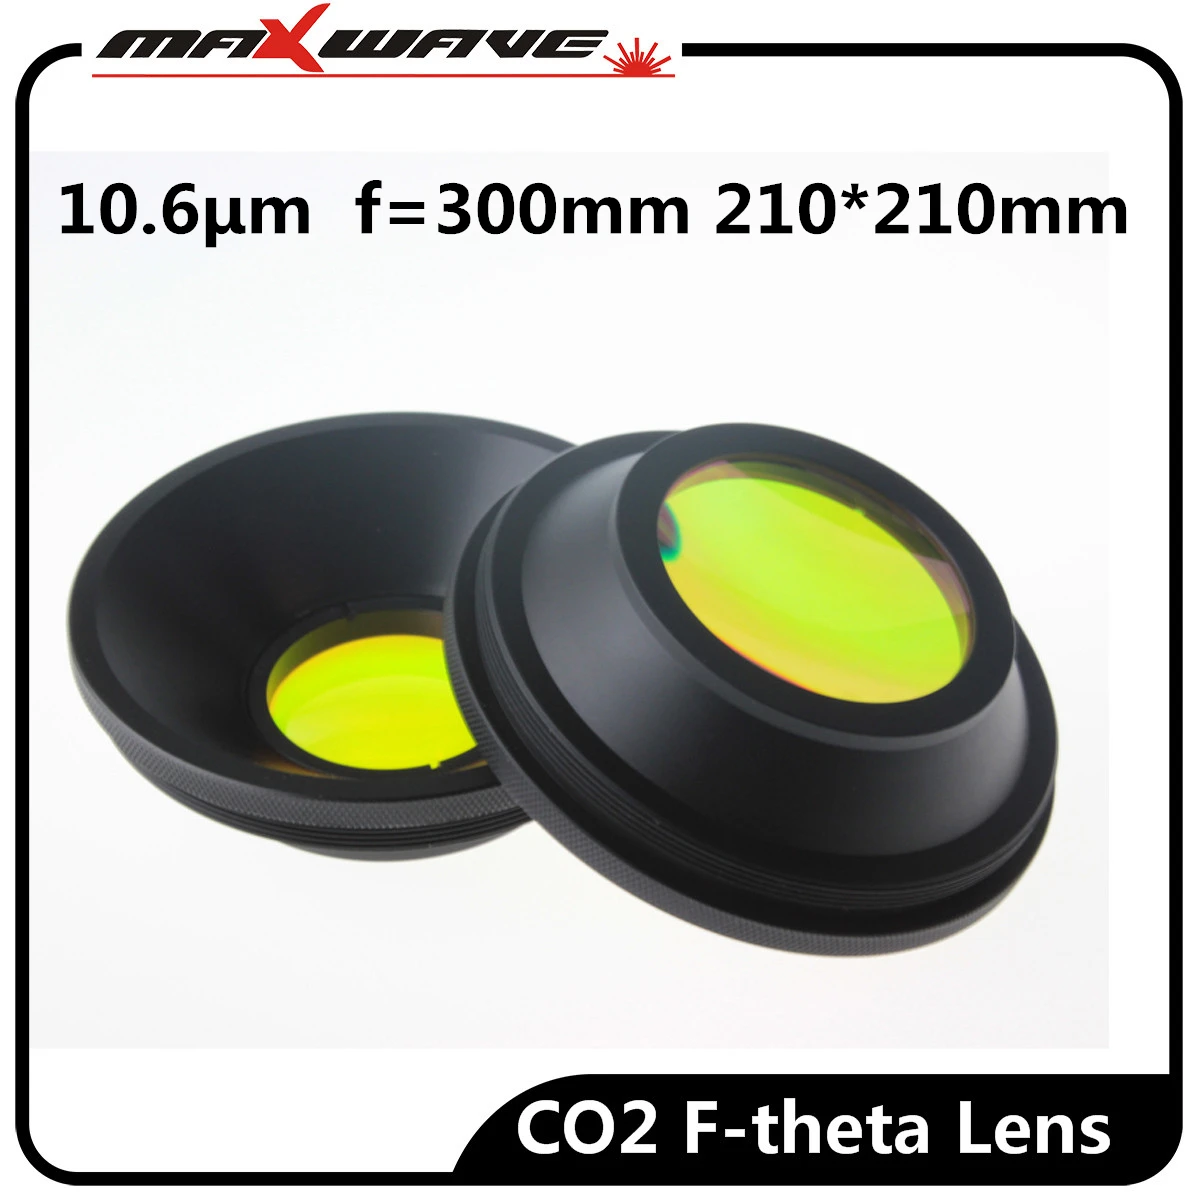 F-theta Lens Field Lens 10.6μm SINO GALVO Fiber Marking Machine Head Lens for CO2 Optical Laser Marking Engraving Cutter